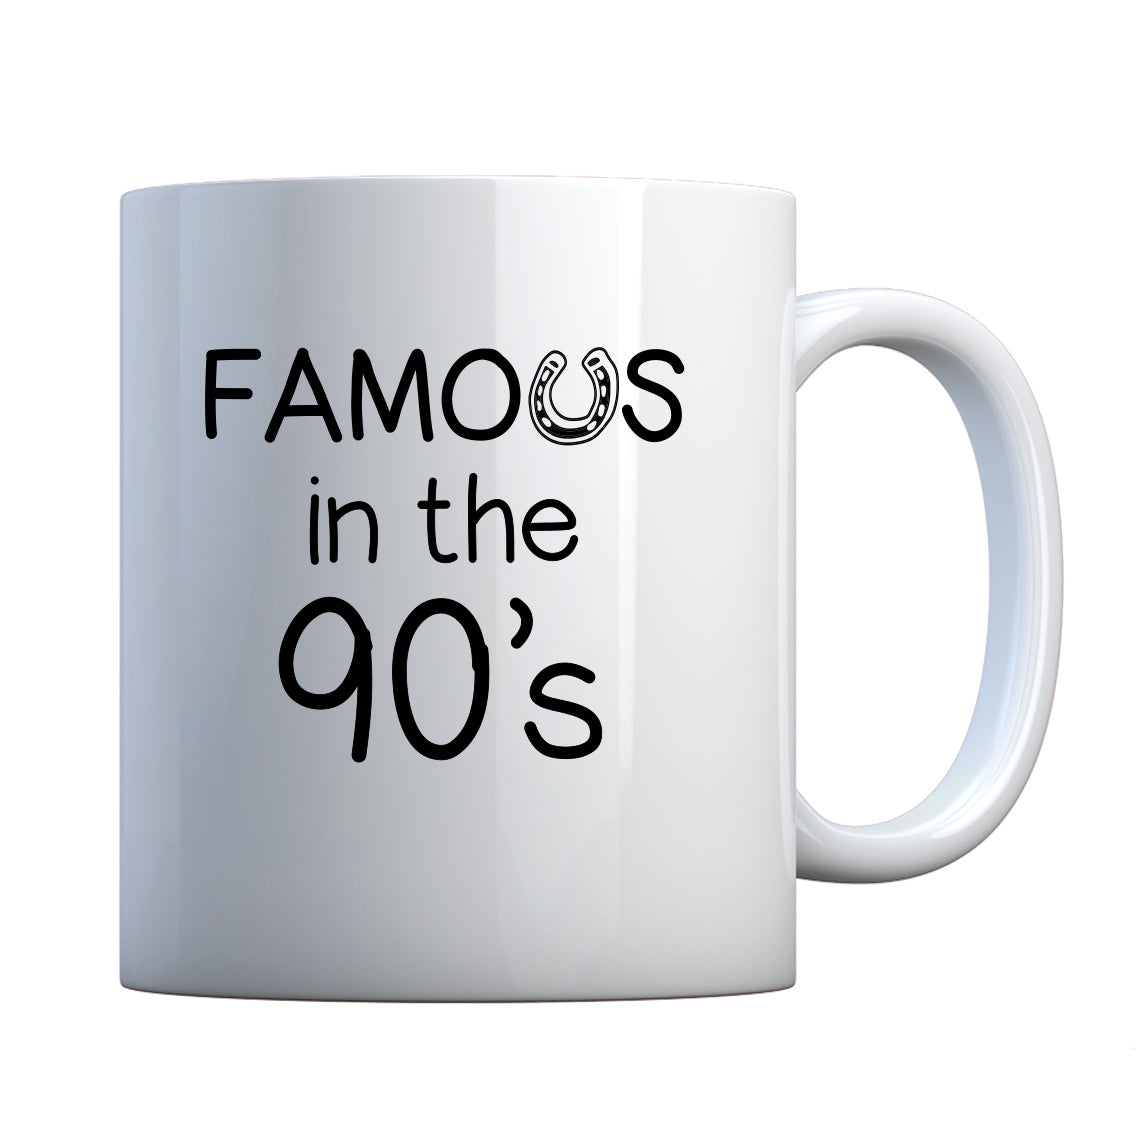 Famous in the 90s Ceramic Gift Mug